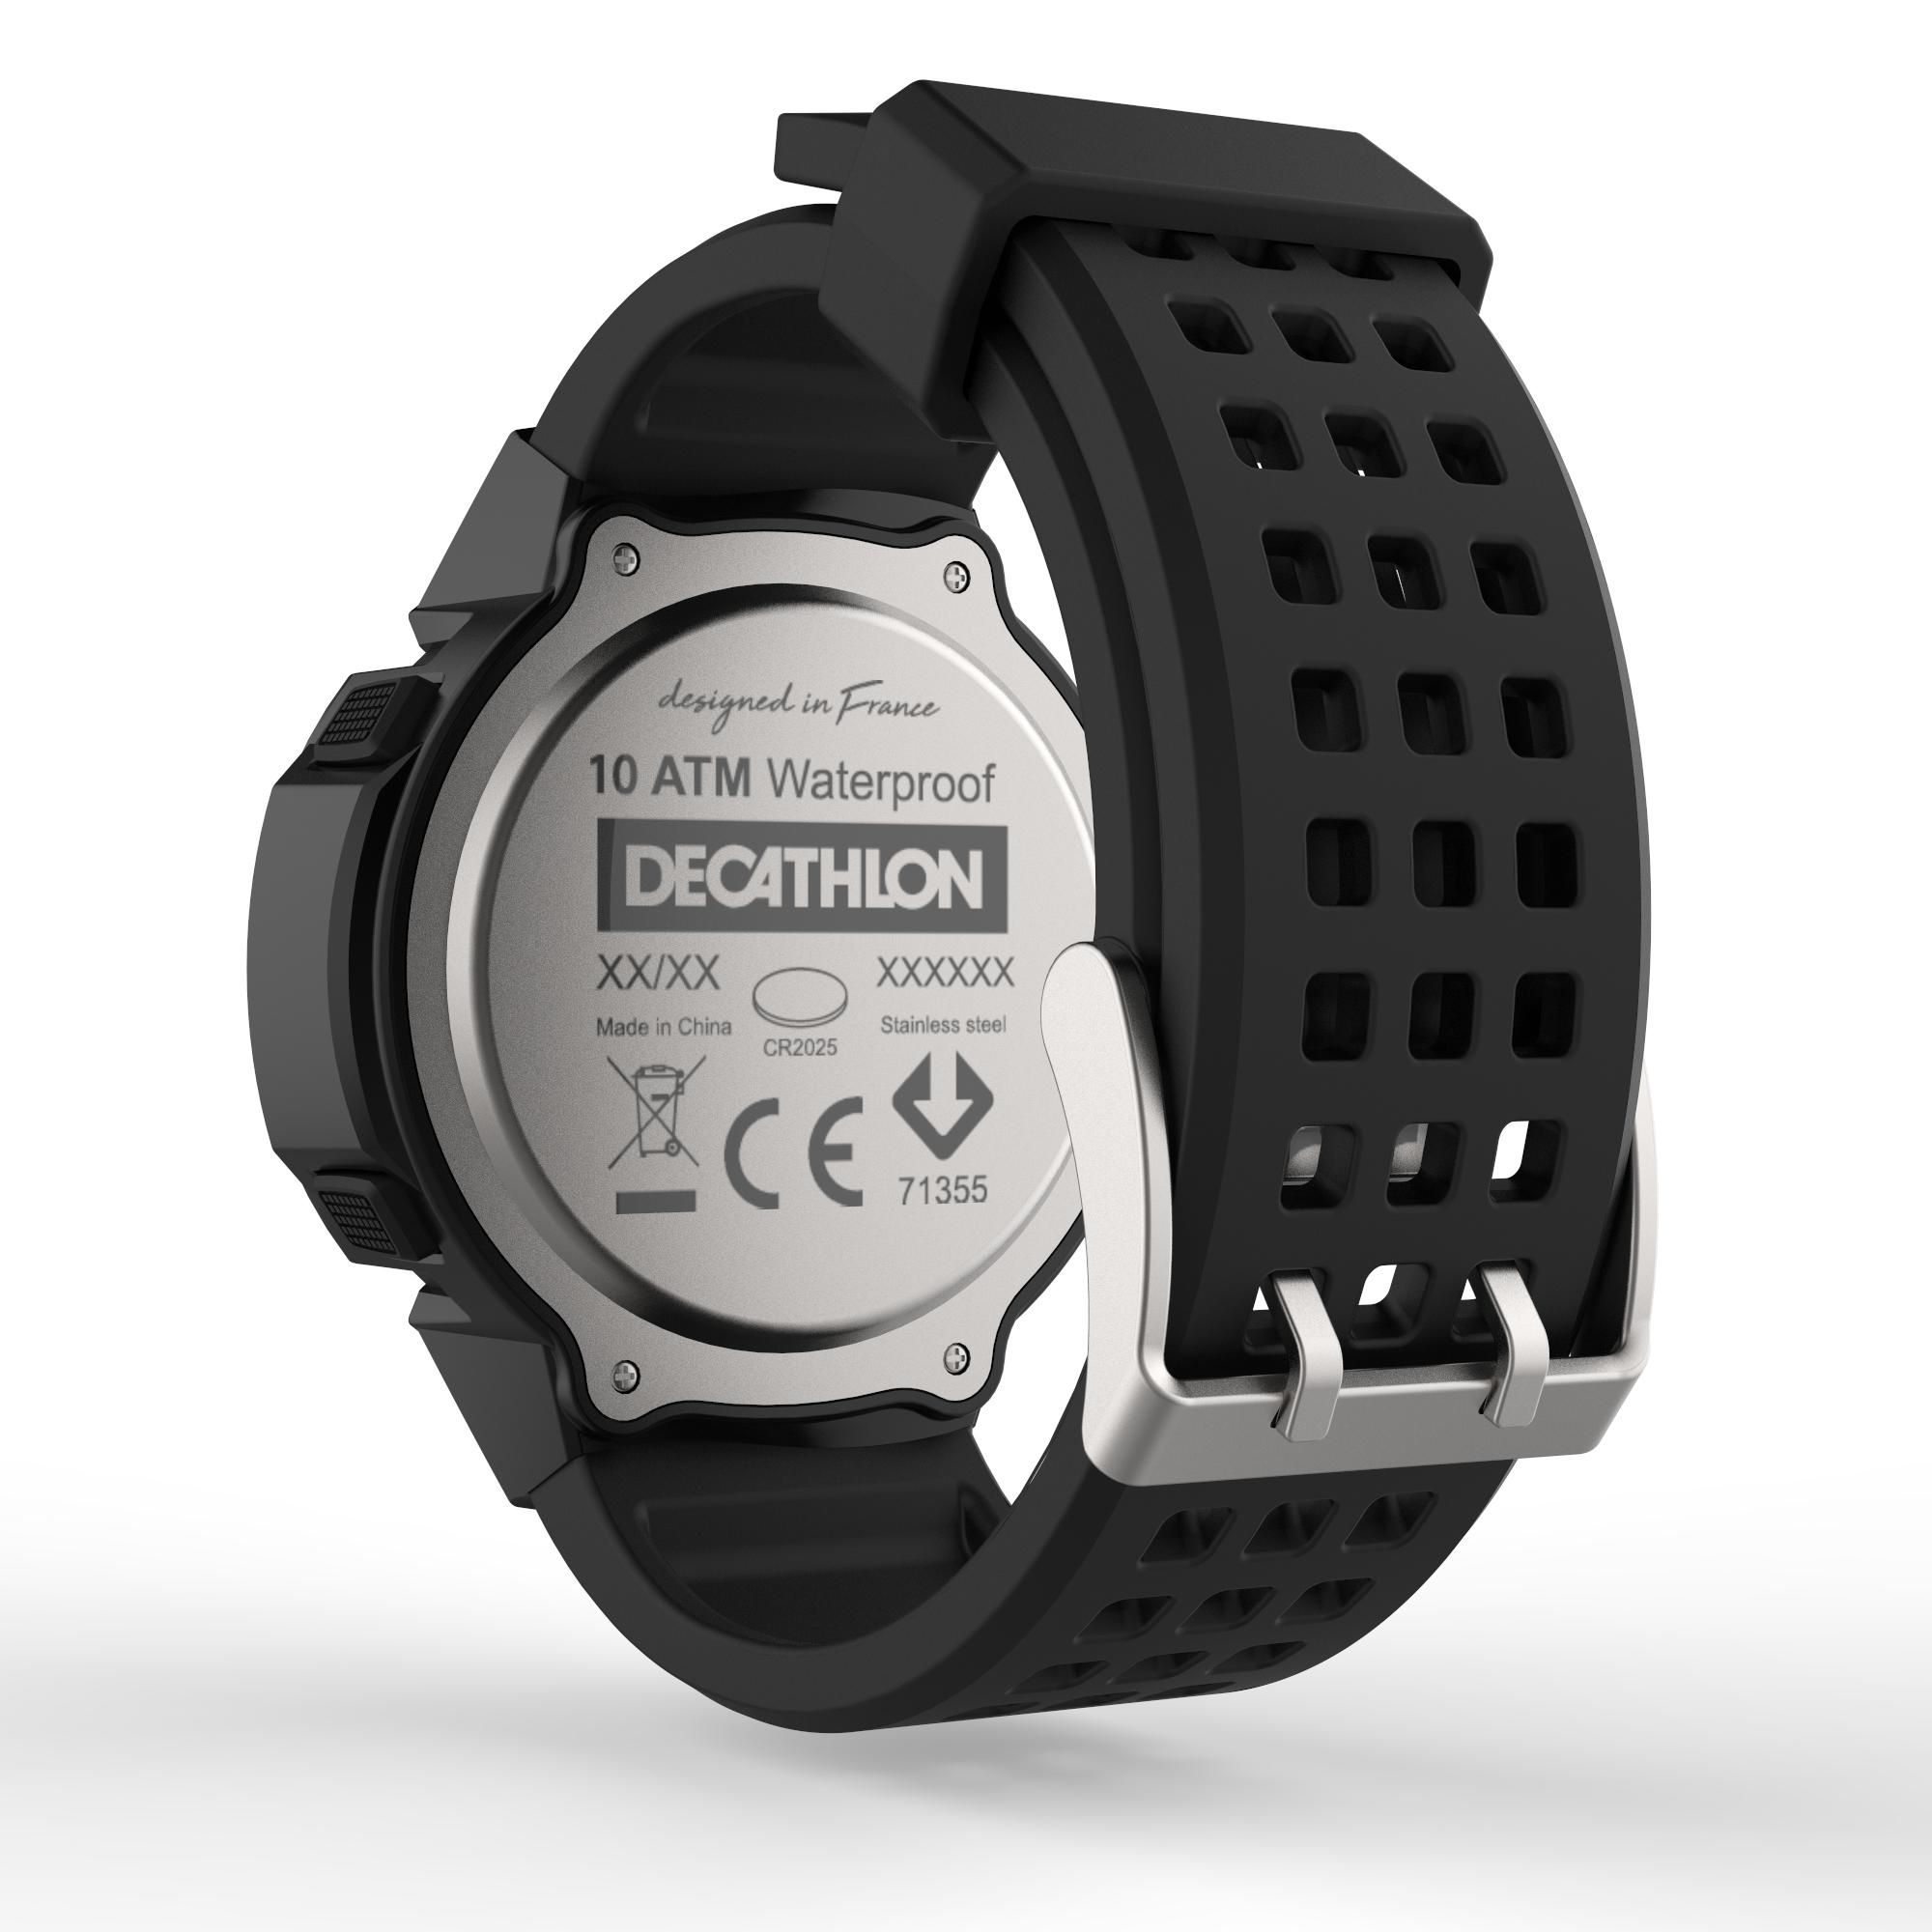 running timer watch shock-resistant black